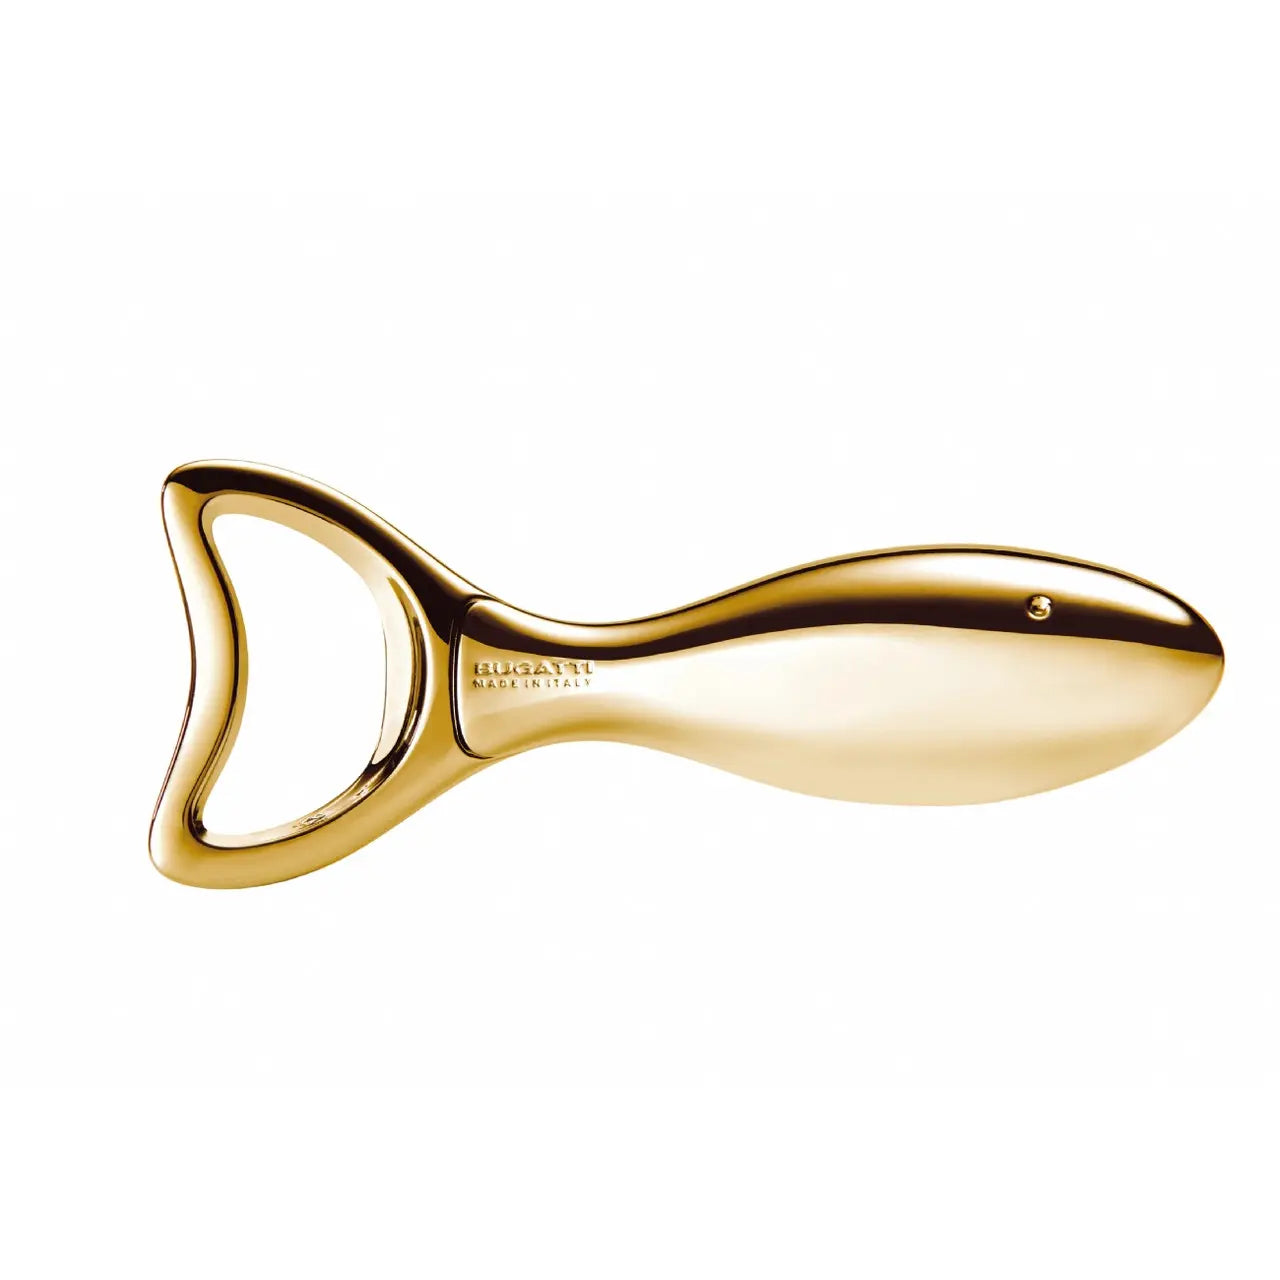 Casa Bugatti Lino Bottle Opener in Gold